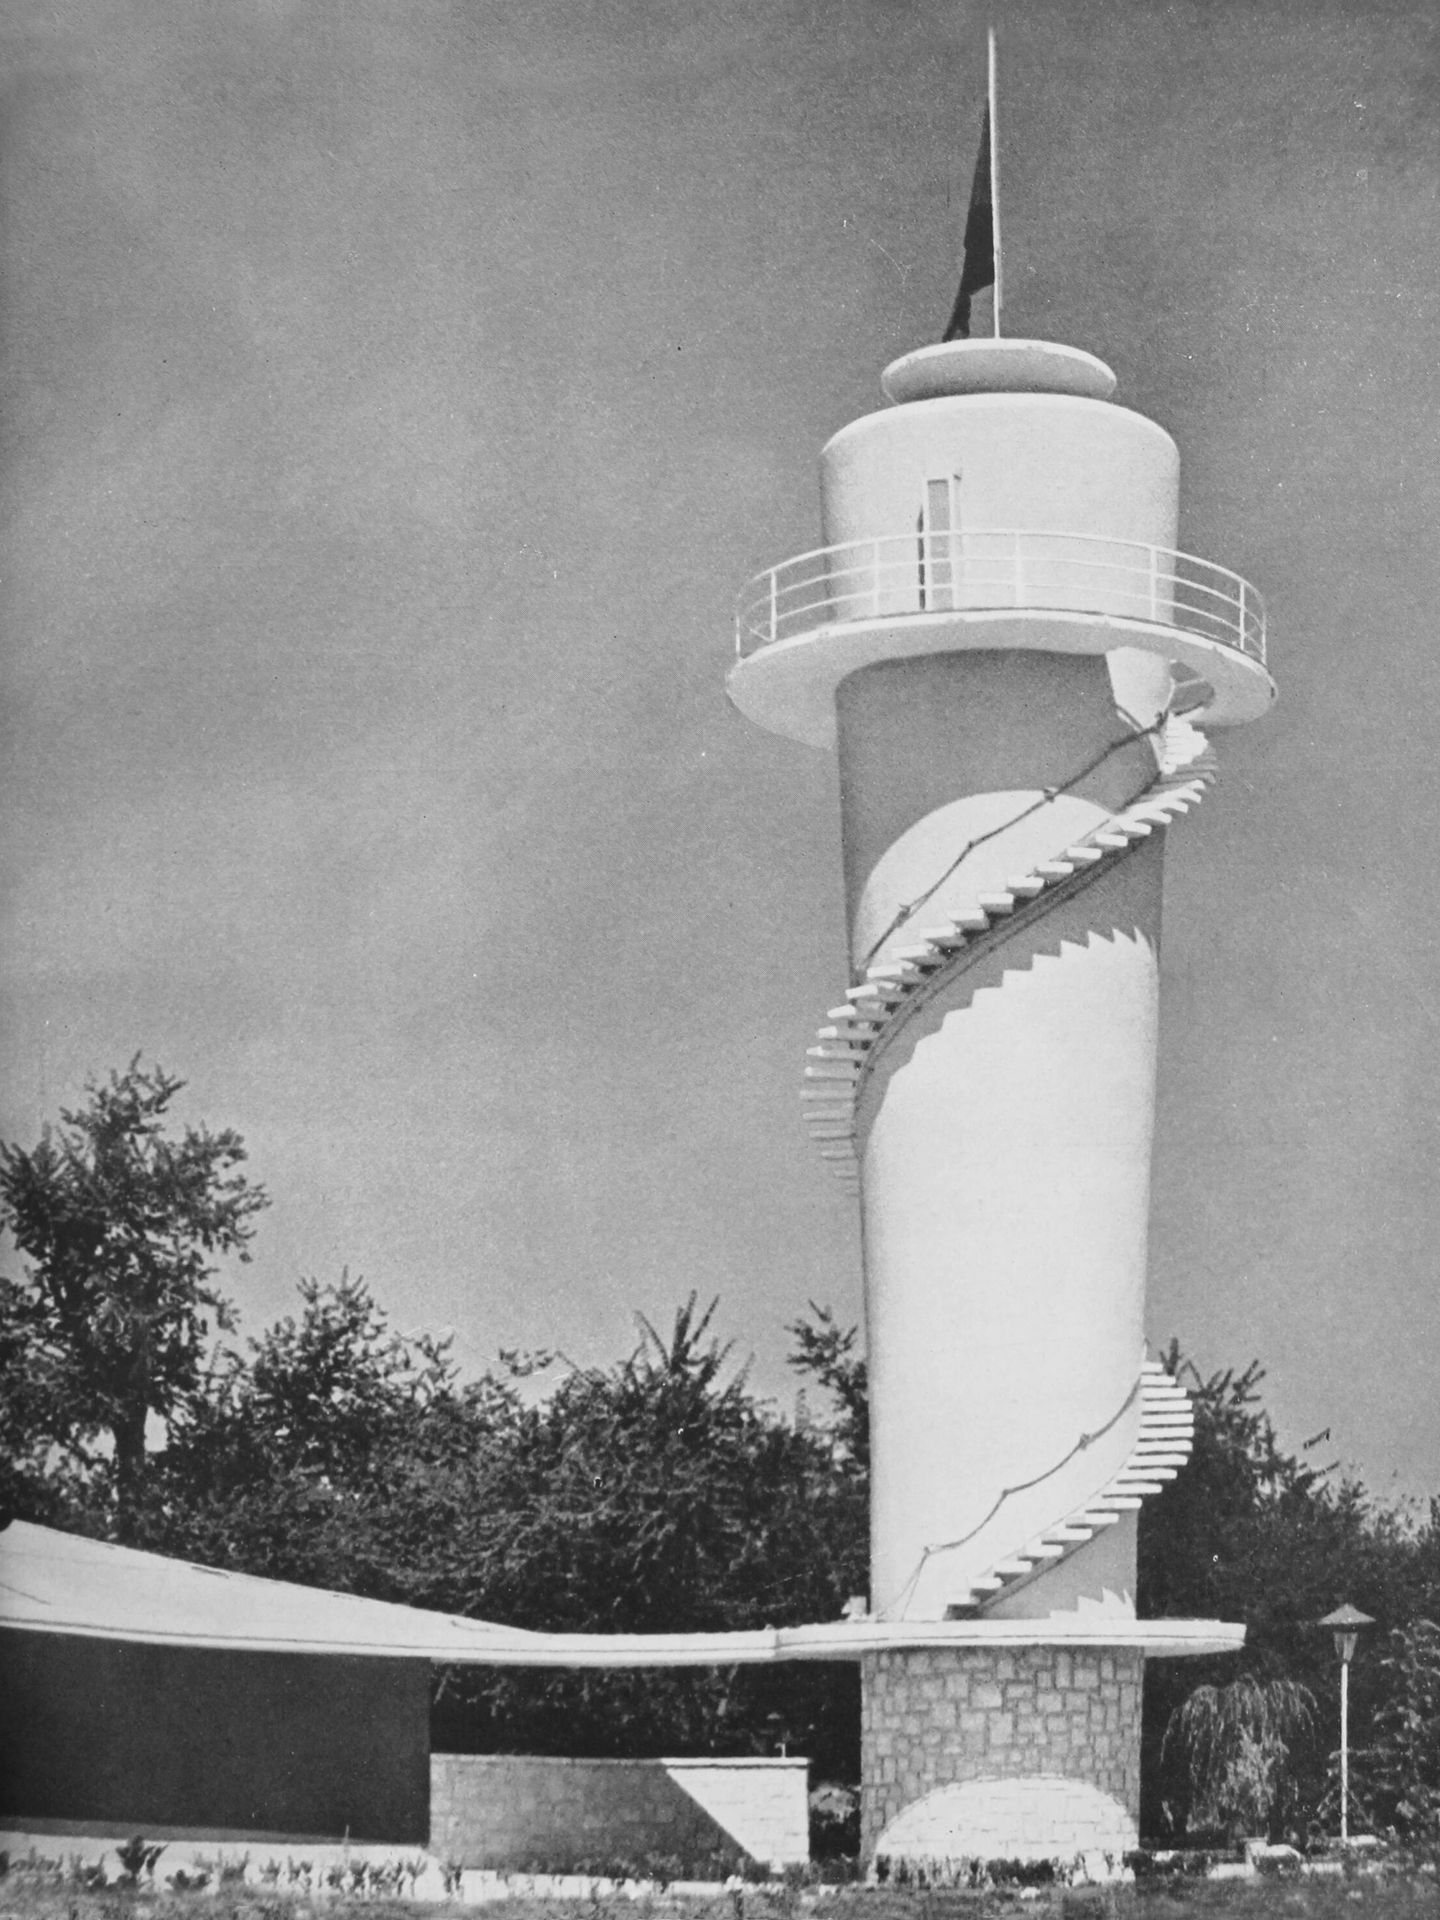 Parque Sindical Torre Depósito. M. Muñoz Monasterio, 1955. (Revista Hogar y Arquitectura 3, OSH, Madrid, marzo abril 1956)